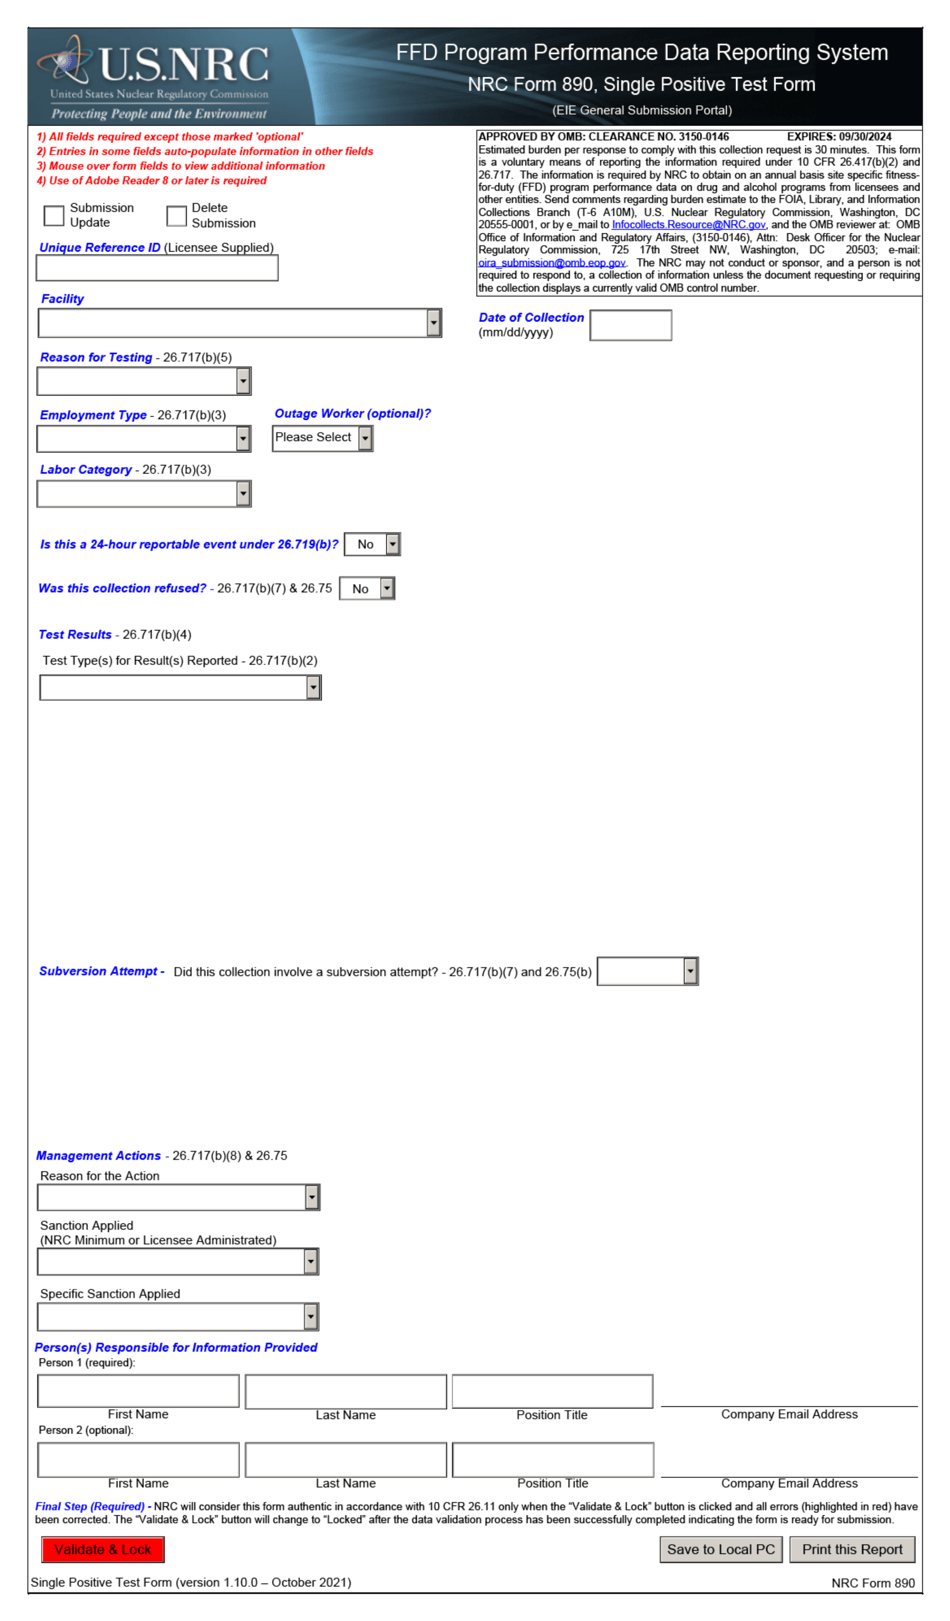 NRC Form 890 Single Positive Test Form, Page 1